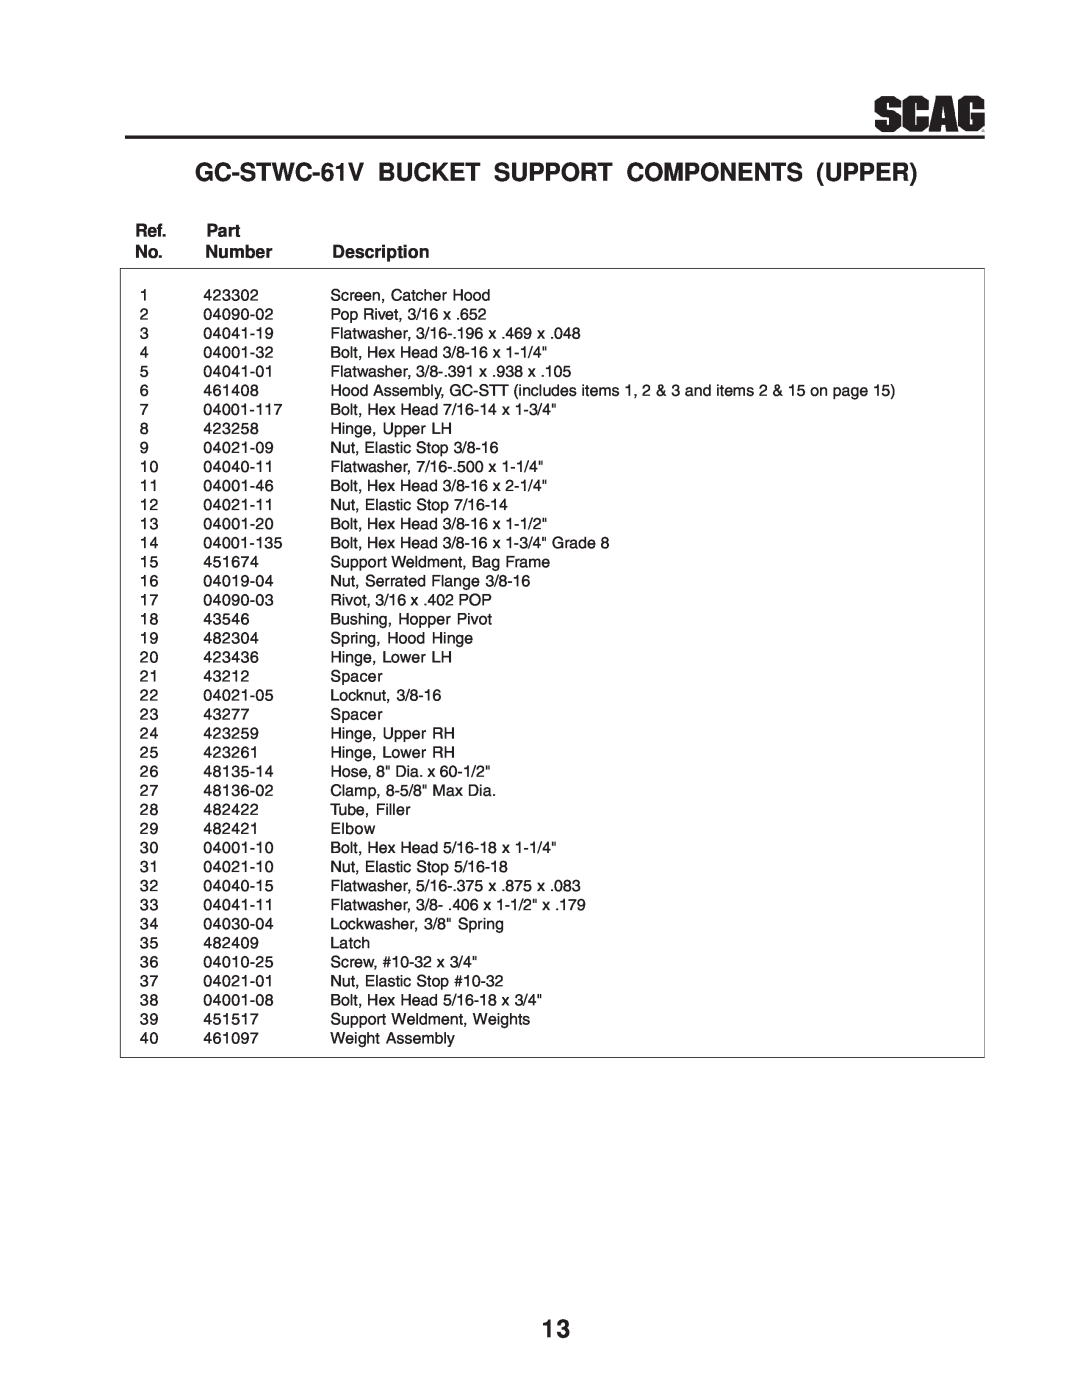 Scag Power Equipment GC-STWC-61V BUCKET SUPPORT COMPONENTS UPPER, Part, Number, Description, 423302 